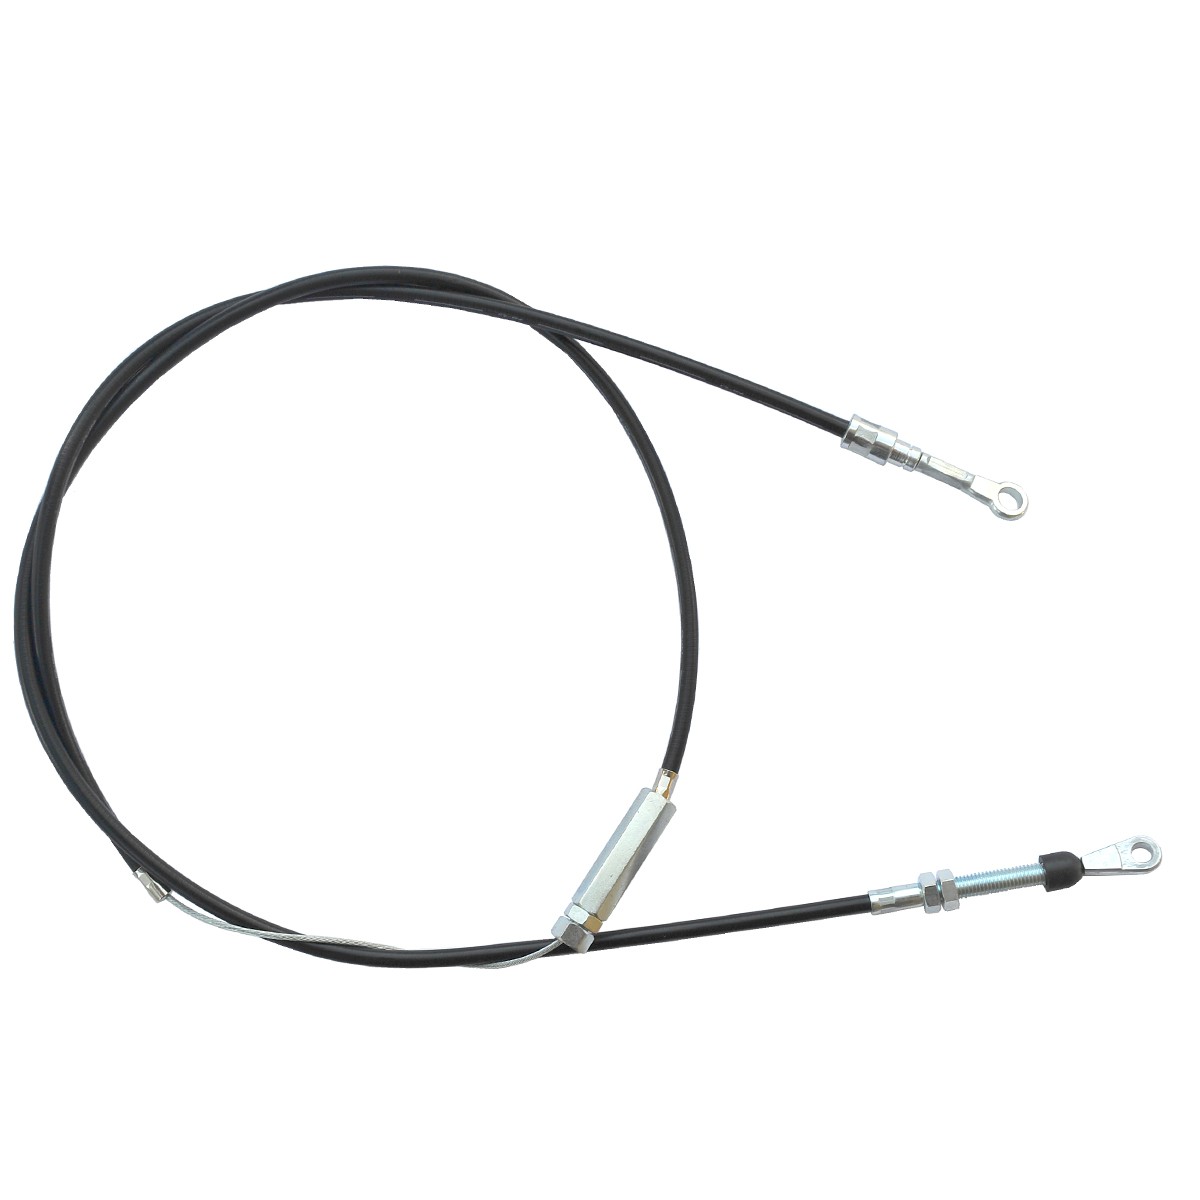 Clutch cable Iseki SXG19 / 1530 mm / 1728-334-240-30